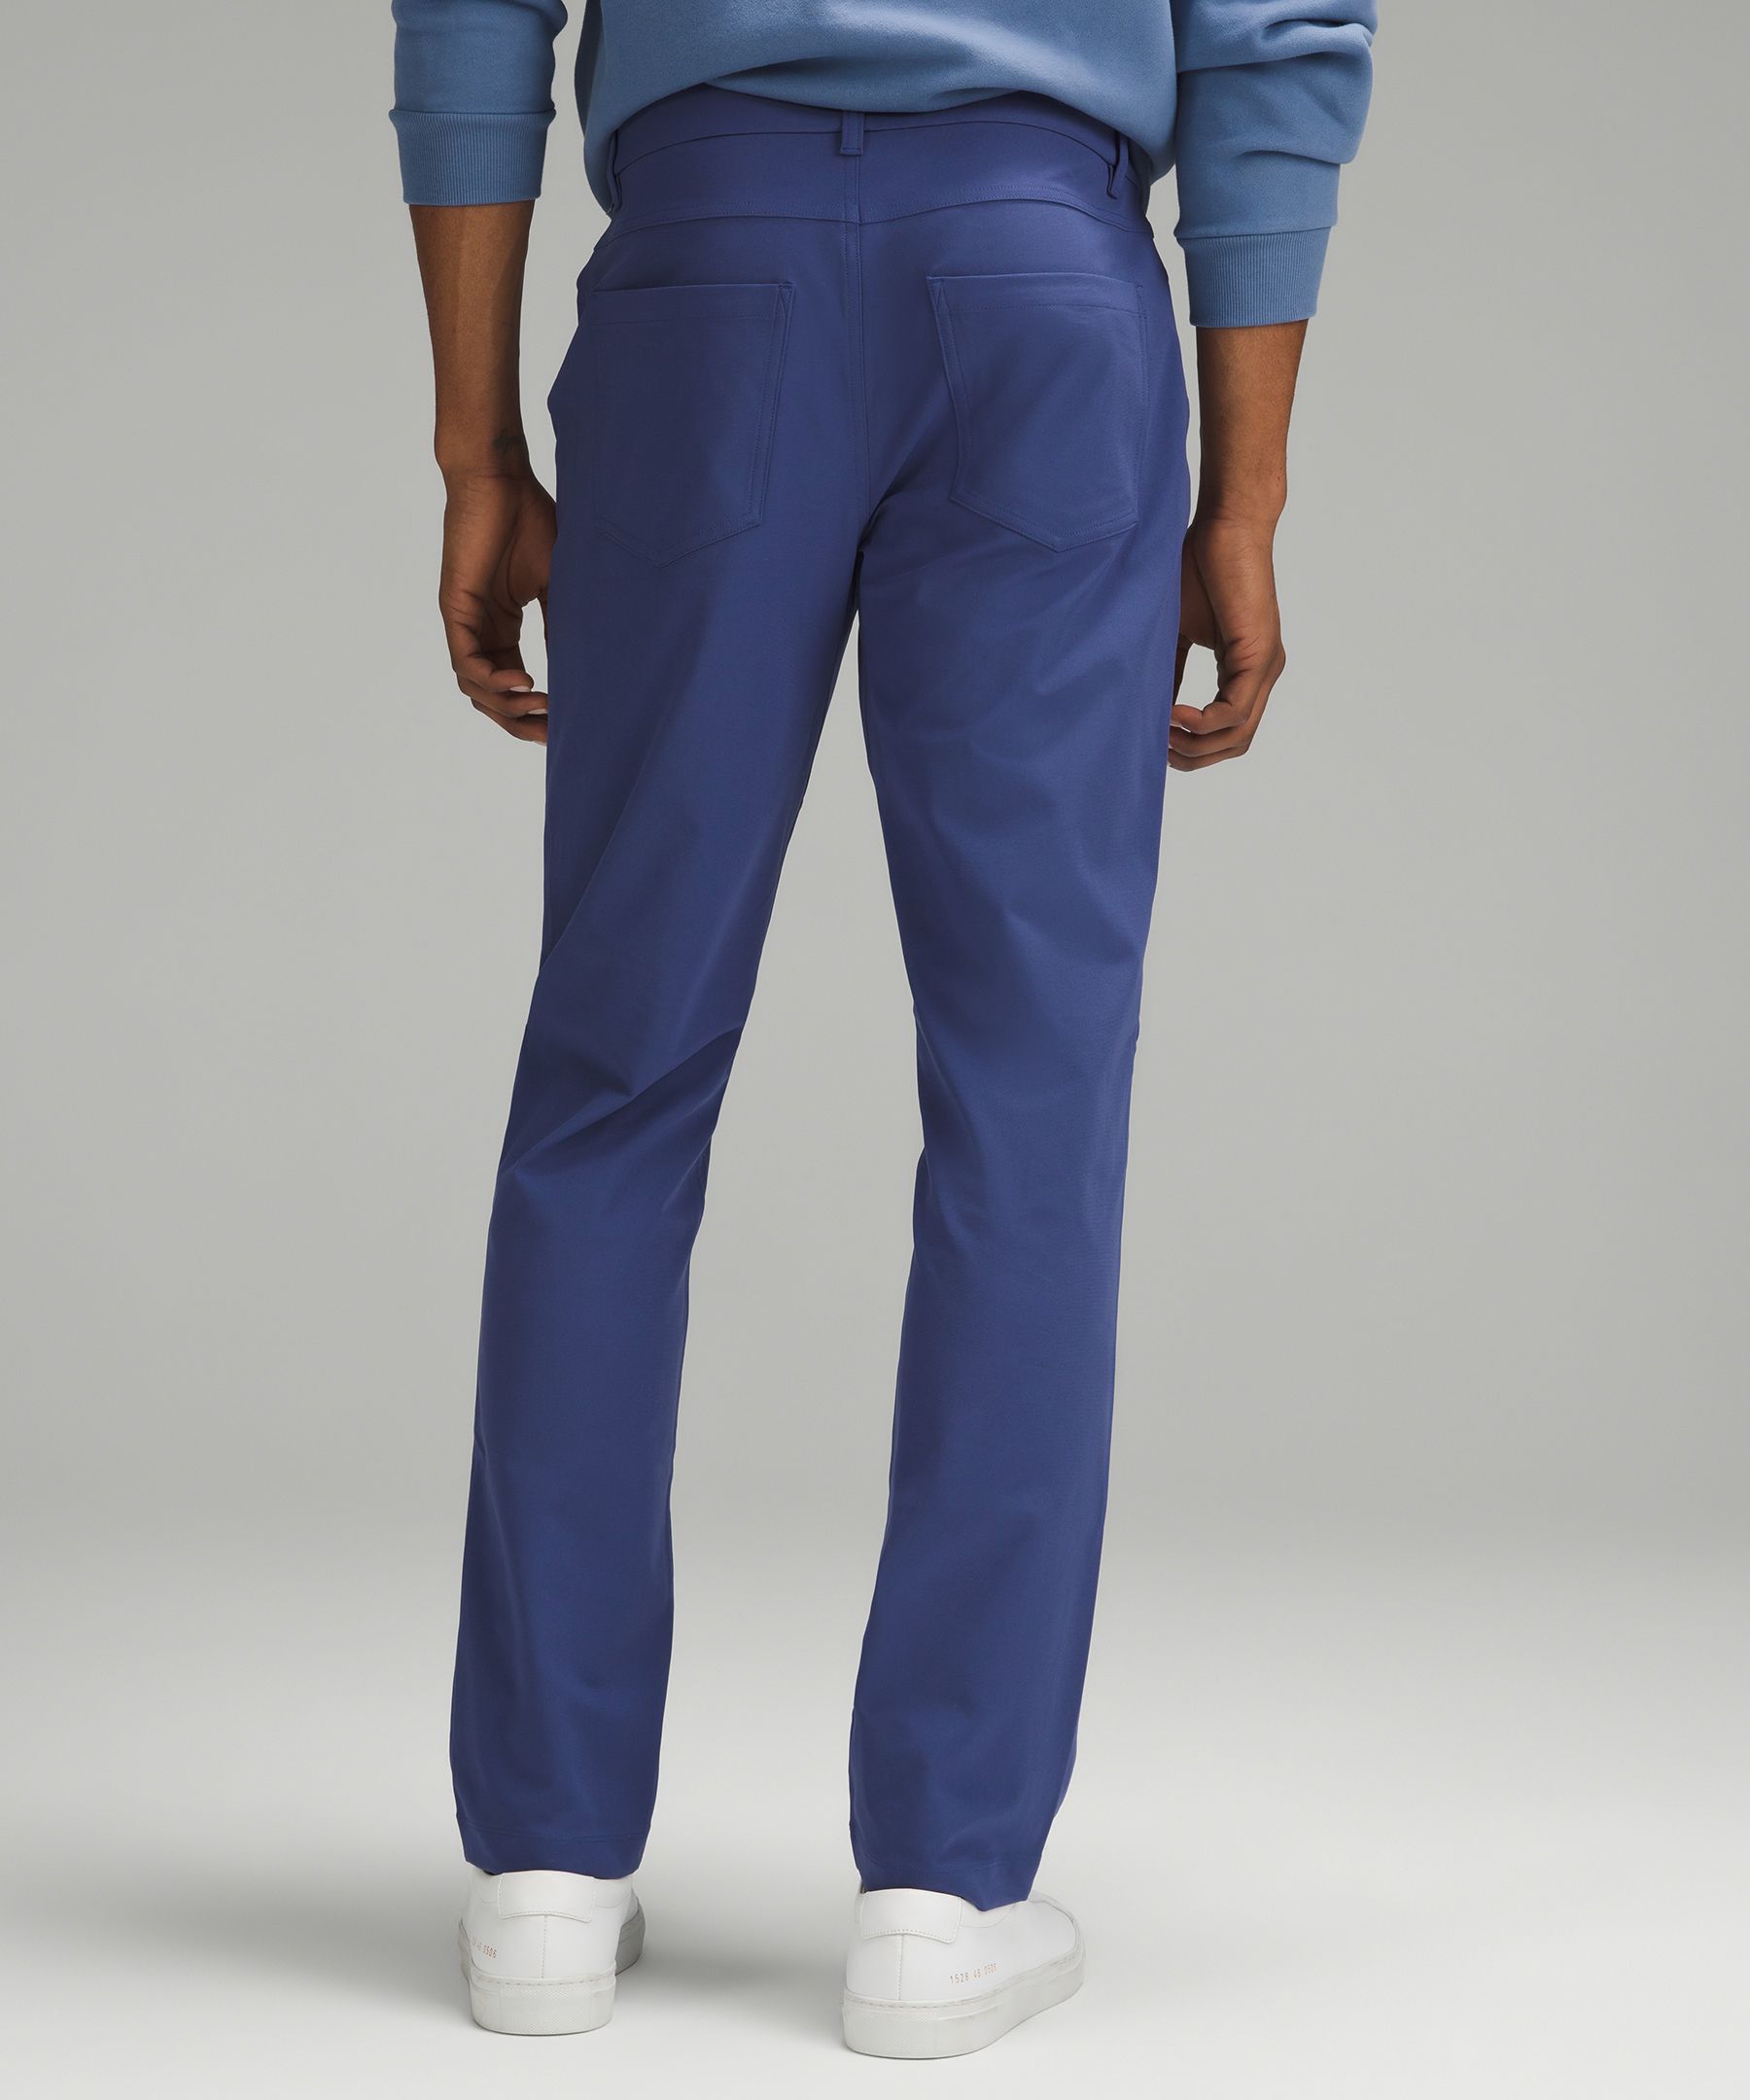 Lululemon athletica ABC Relaxed-Fit 5 Pocket Pant 32L *Warpstreme, Men's  Trousers